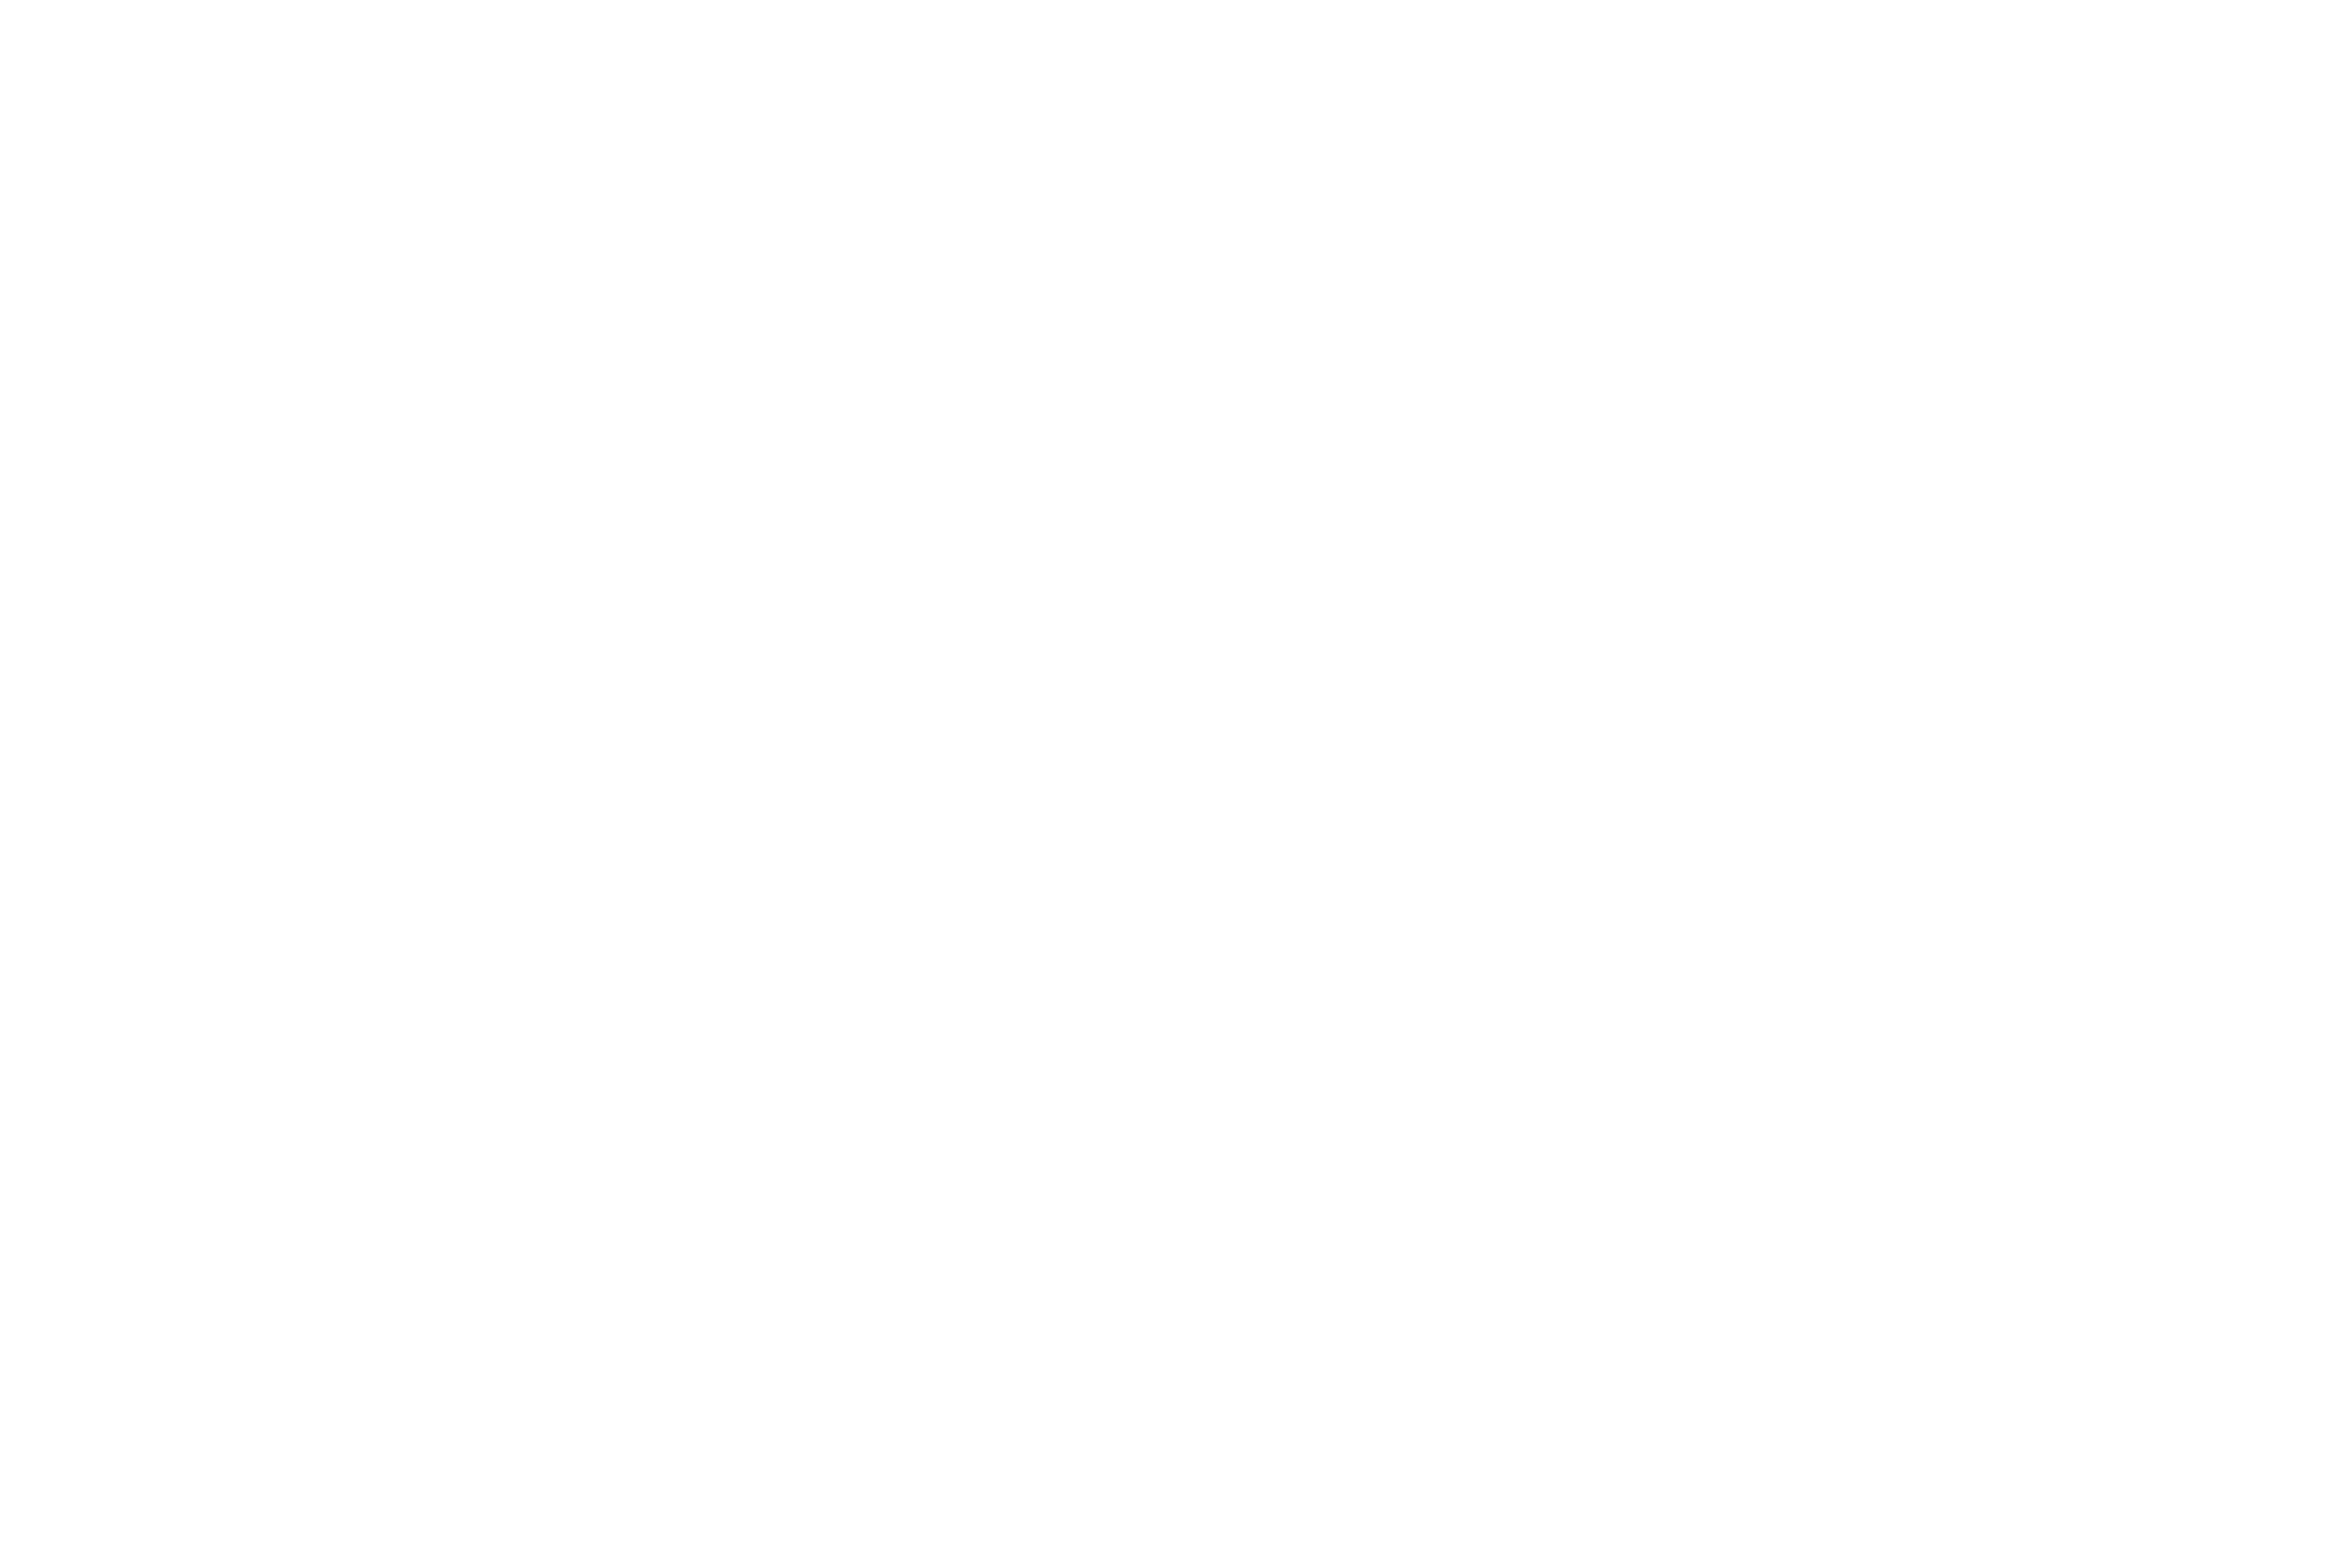 Transcendent Photography